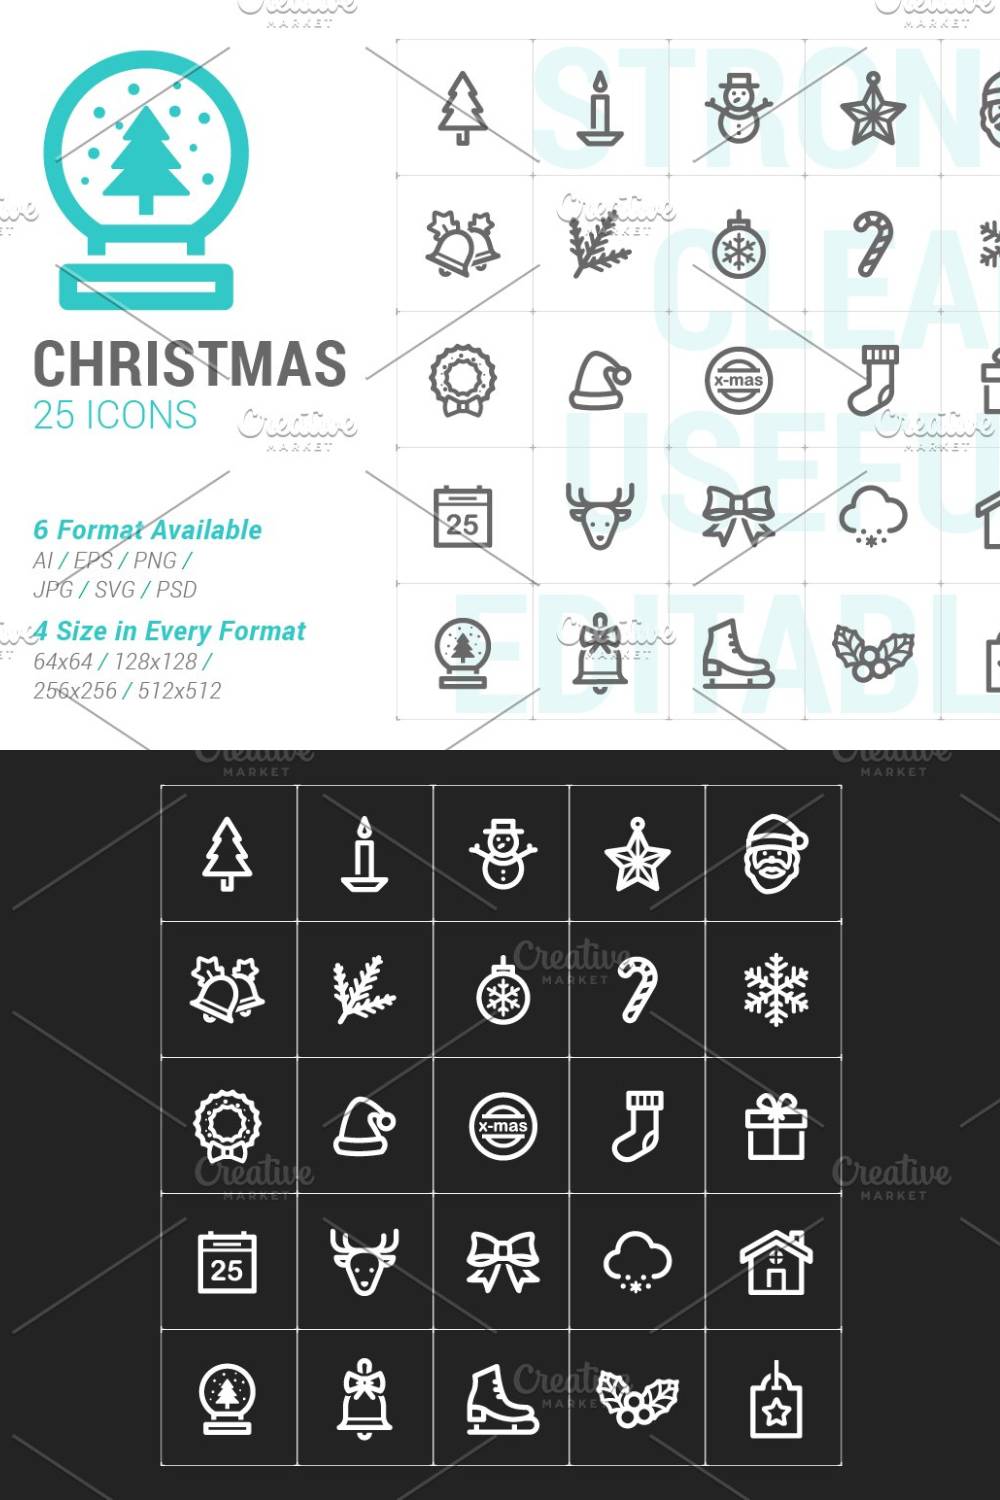 Christmas Mini Icon Pinterest Cover.